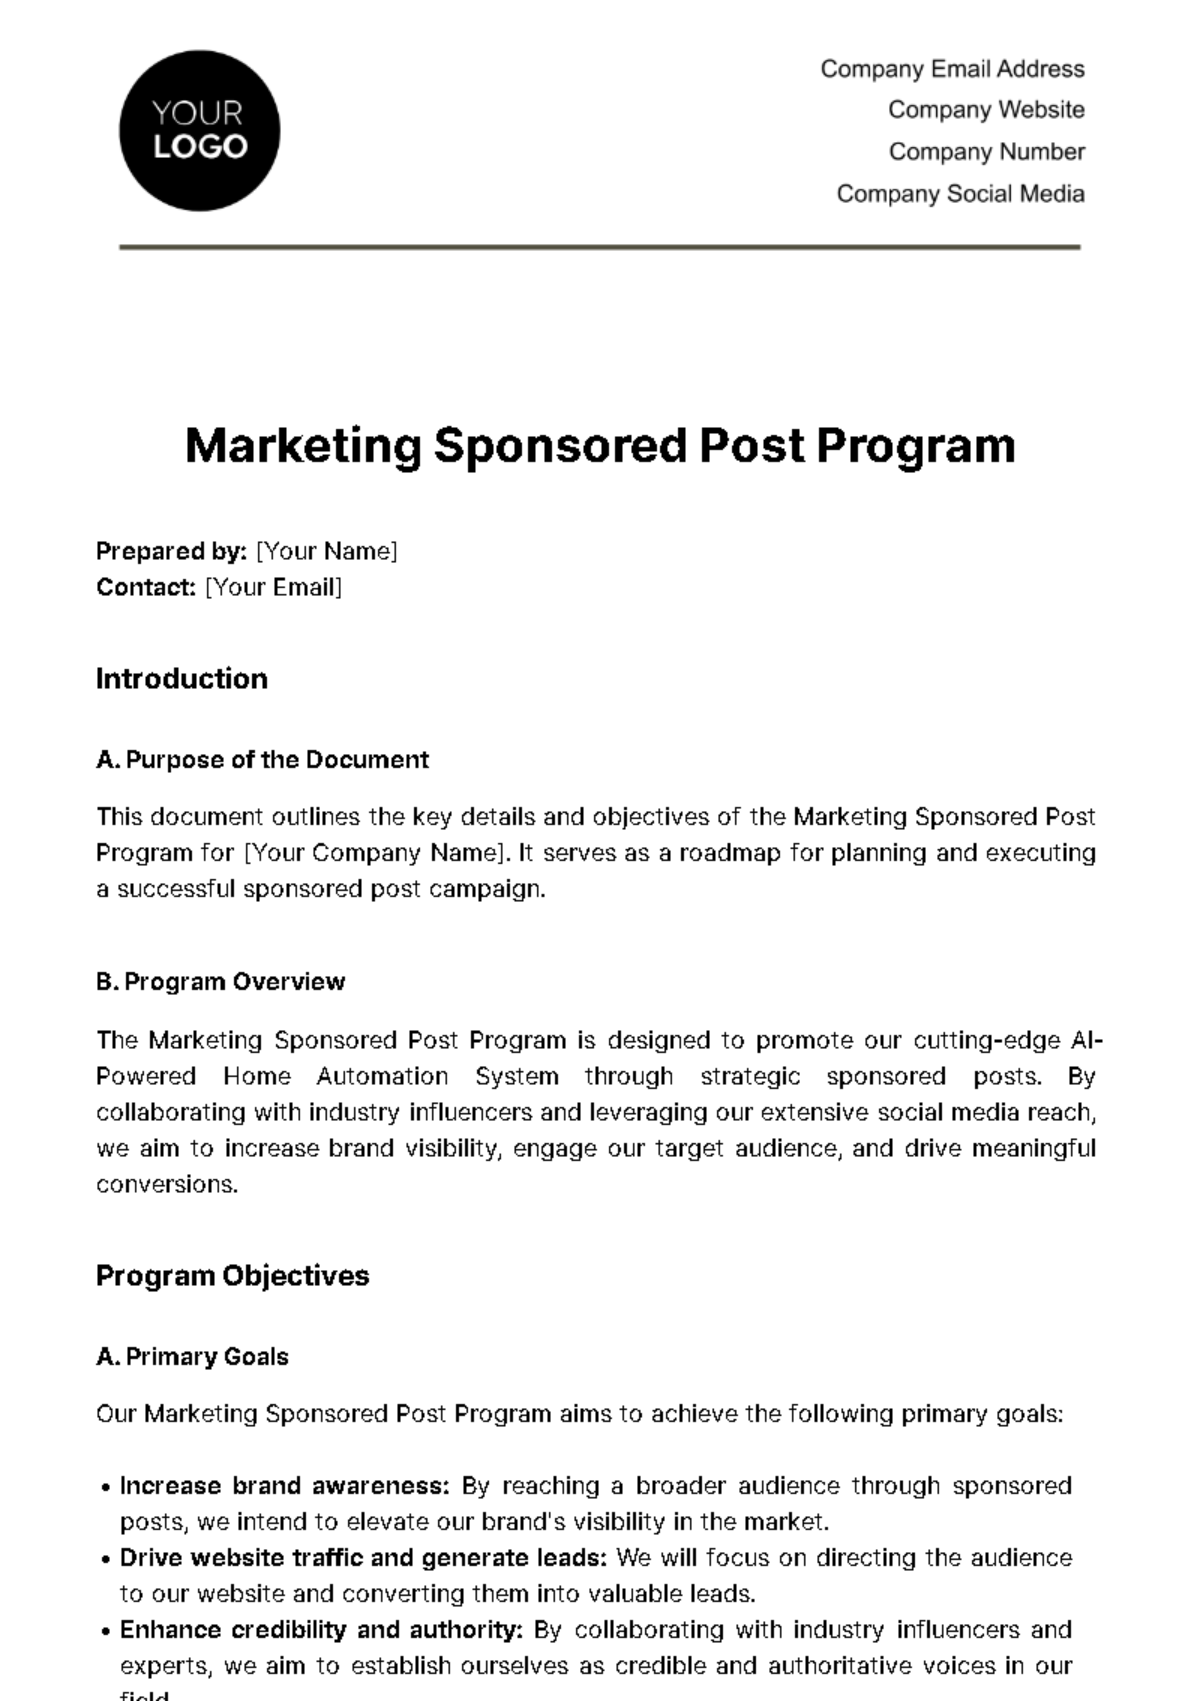 Marketing Sponsored Post Program Template